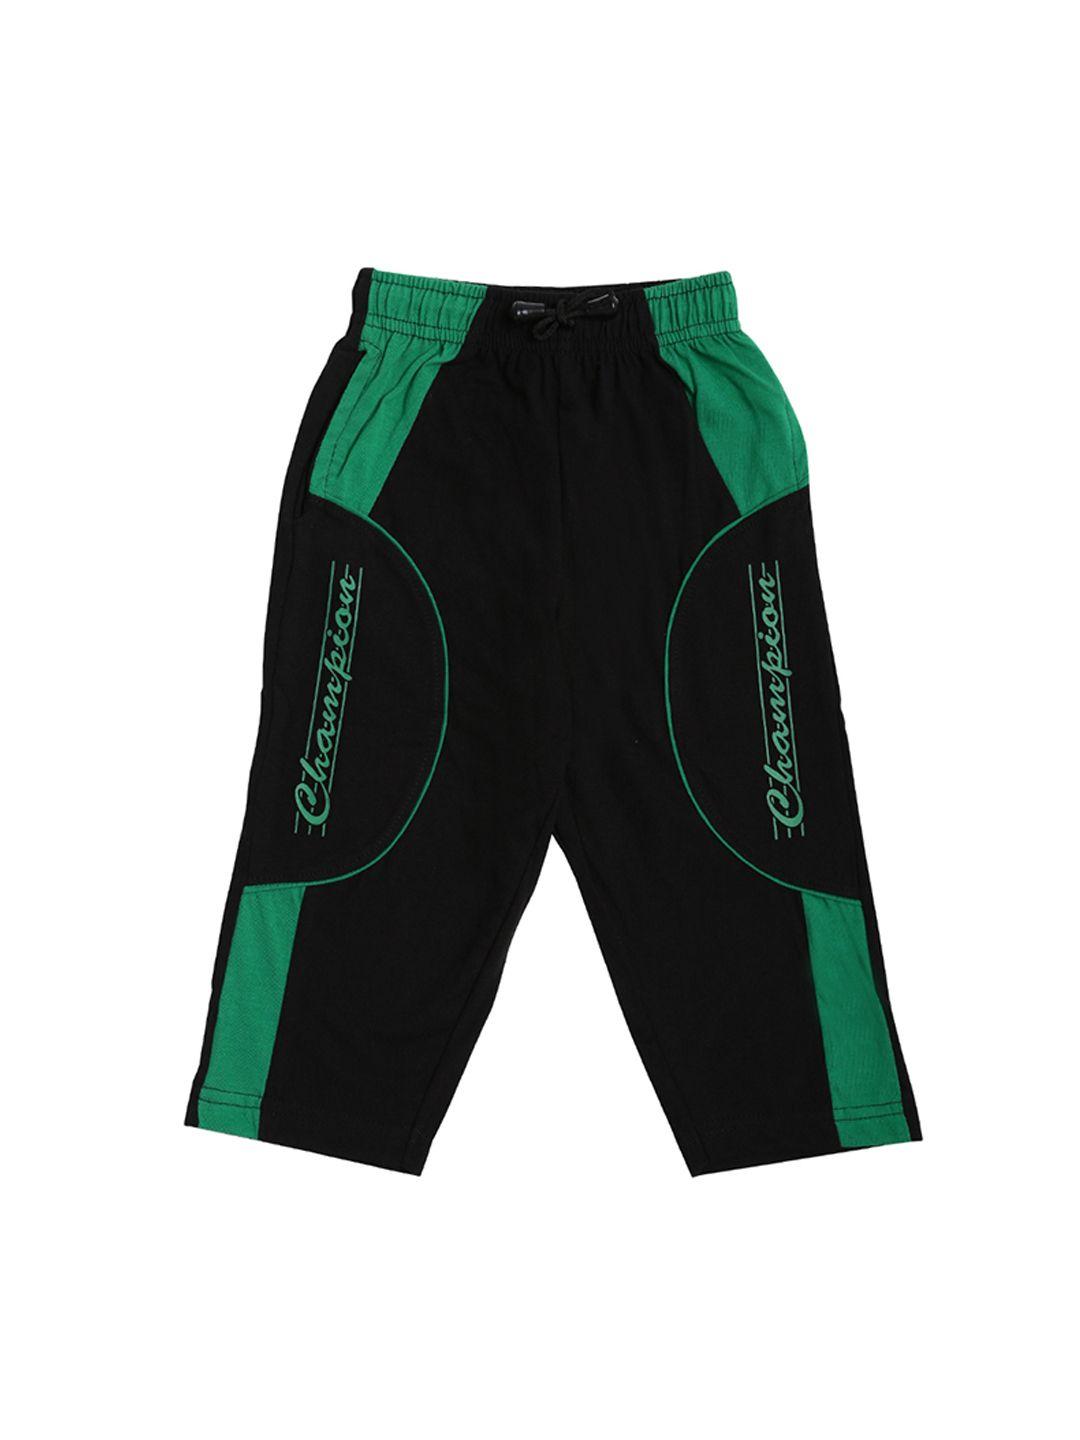 dollar champion kidswear boys black & green colourblocked lounge shorts